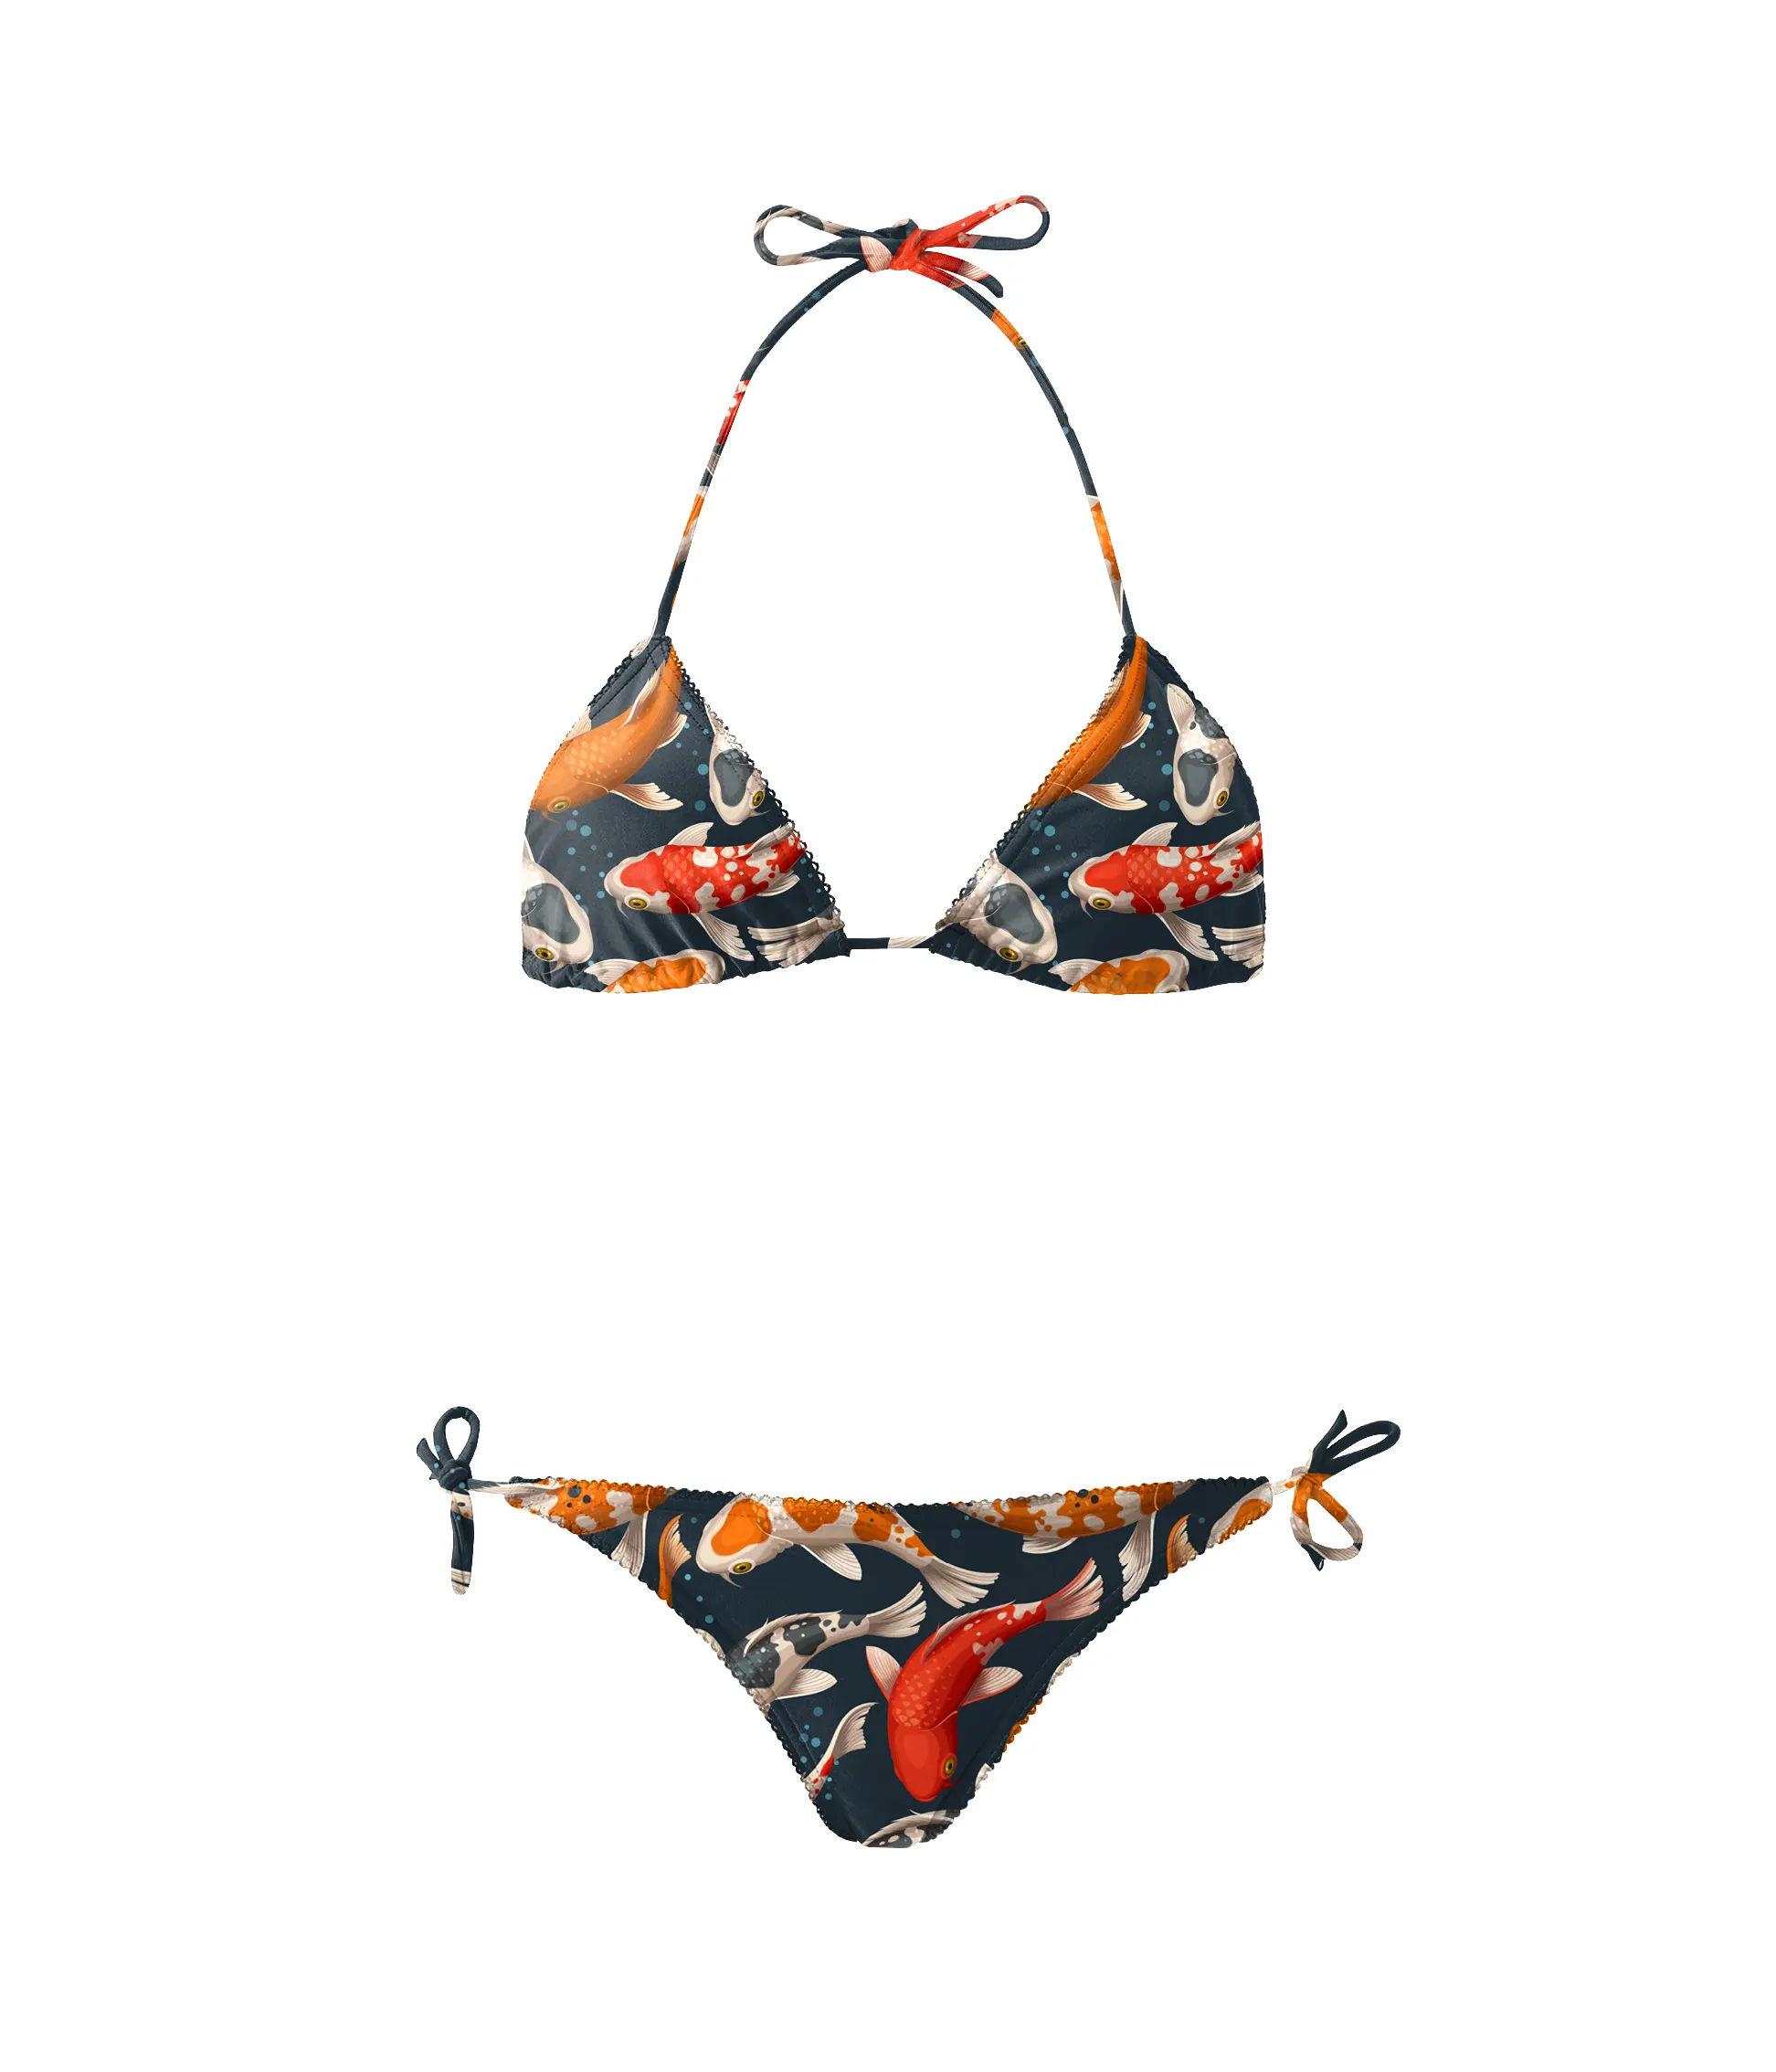 2021 Hot Salewoman Swimming Floral High Waist Customizable Black Girls Micro Swimsuits Bikini For Women